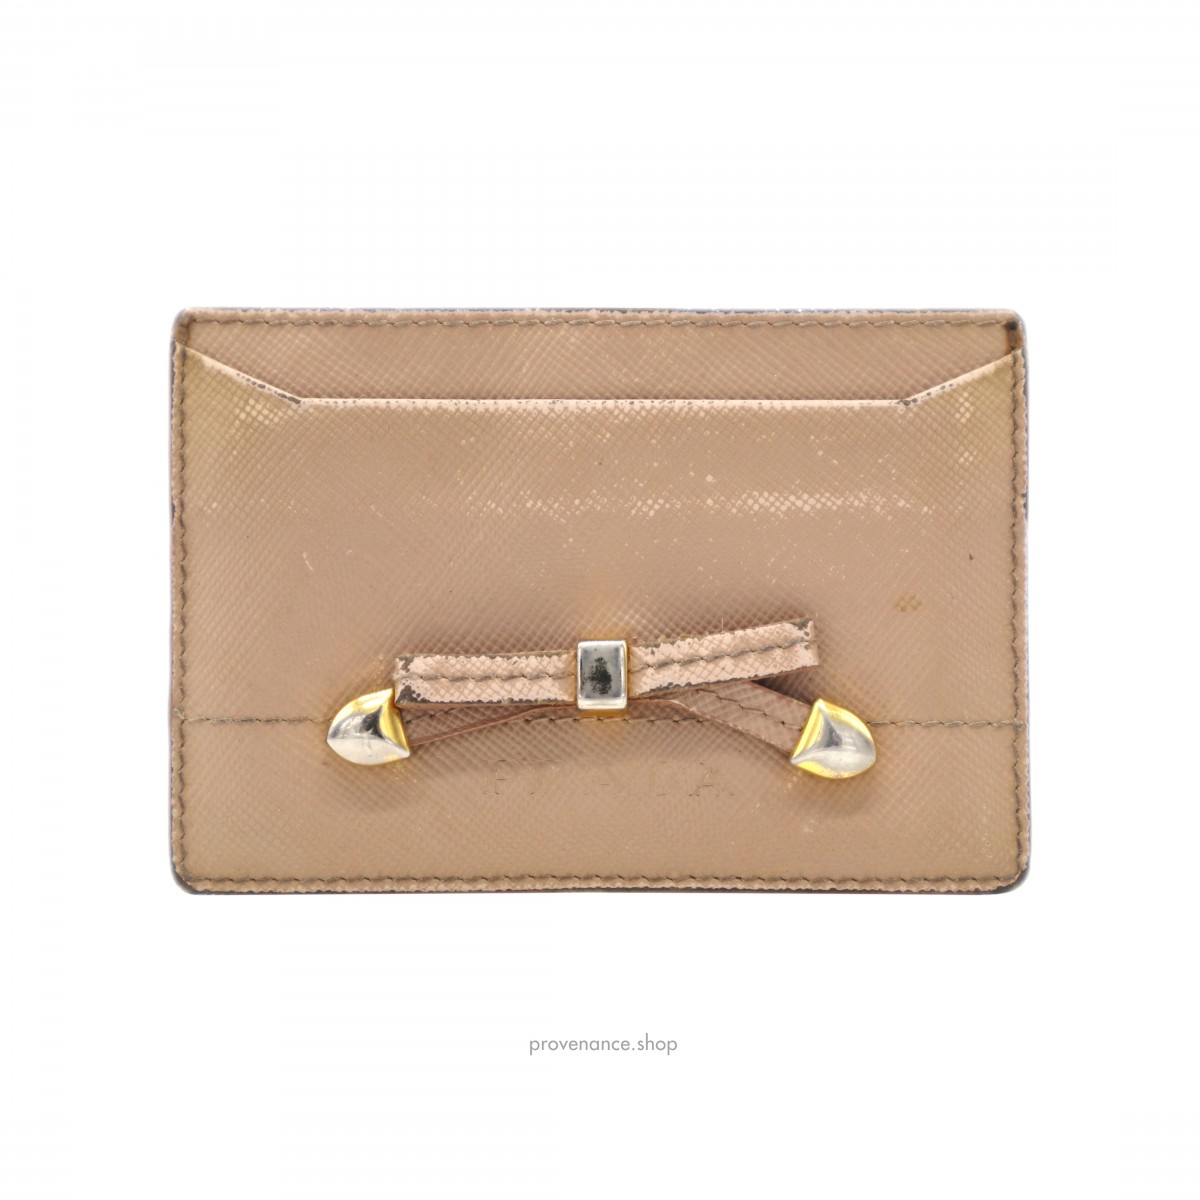 Prada Cardholder Wallet - Peach Saffiano Leather - 1